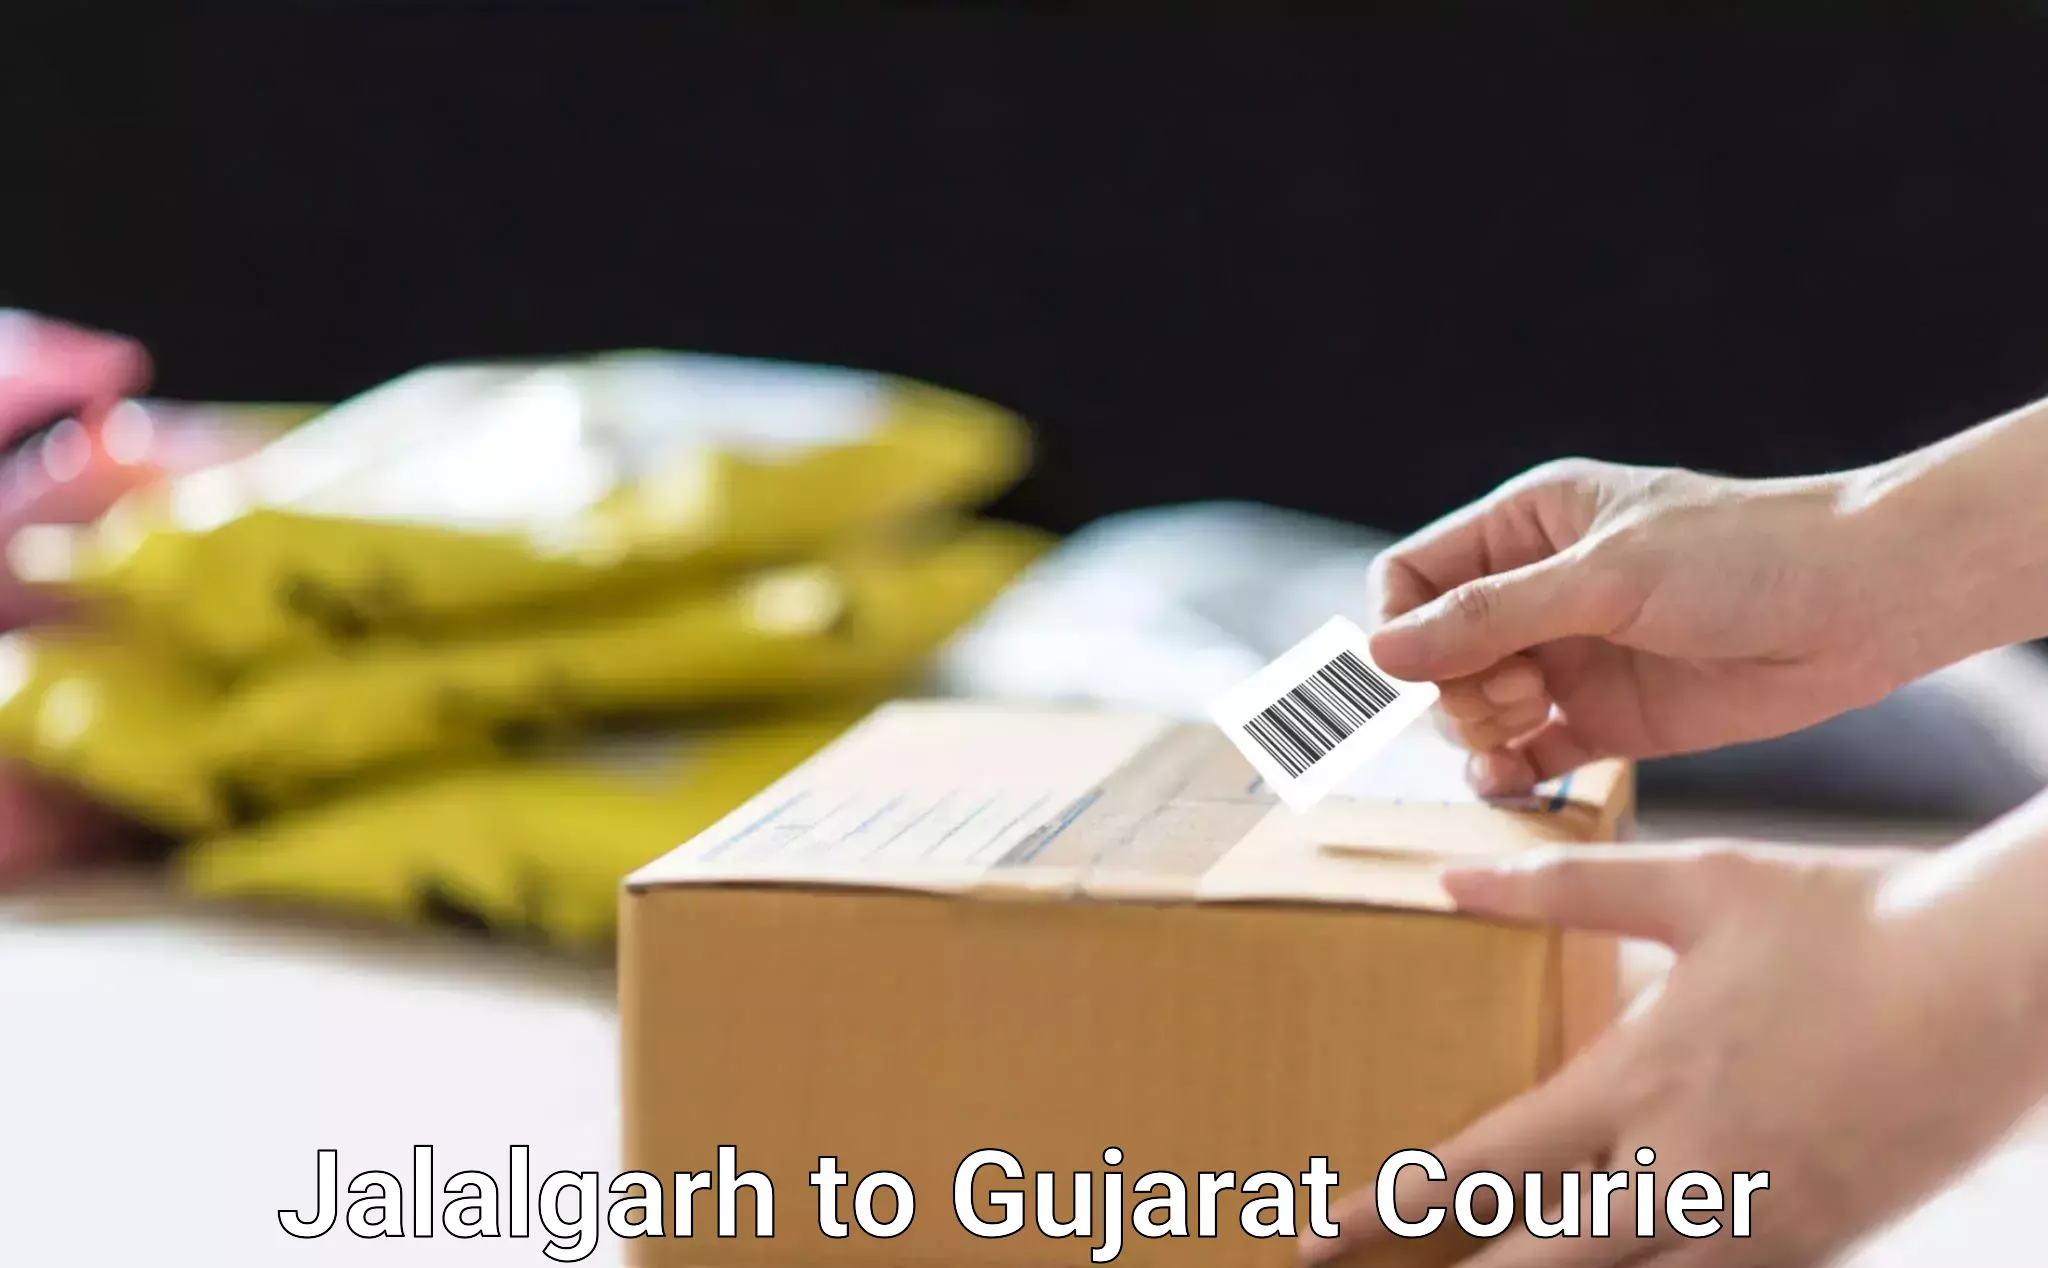 Professional moving company Jalalgarh to Gujarat